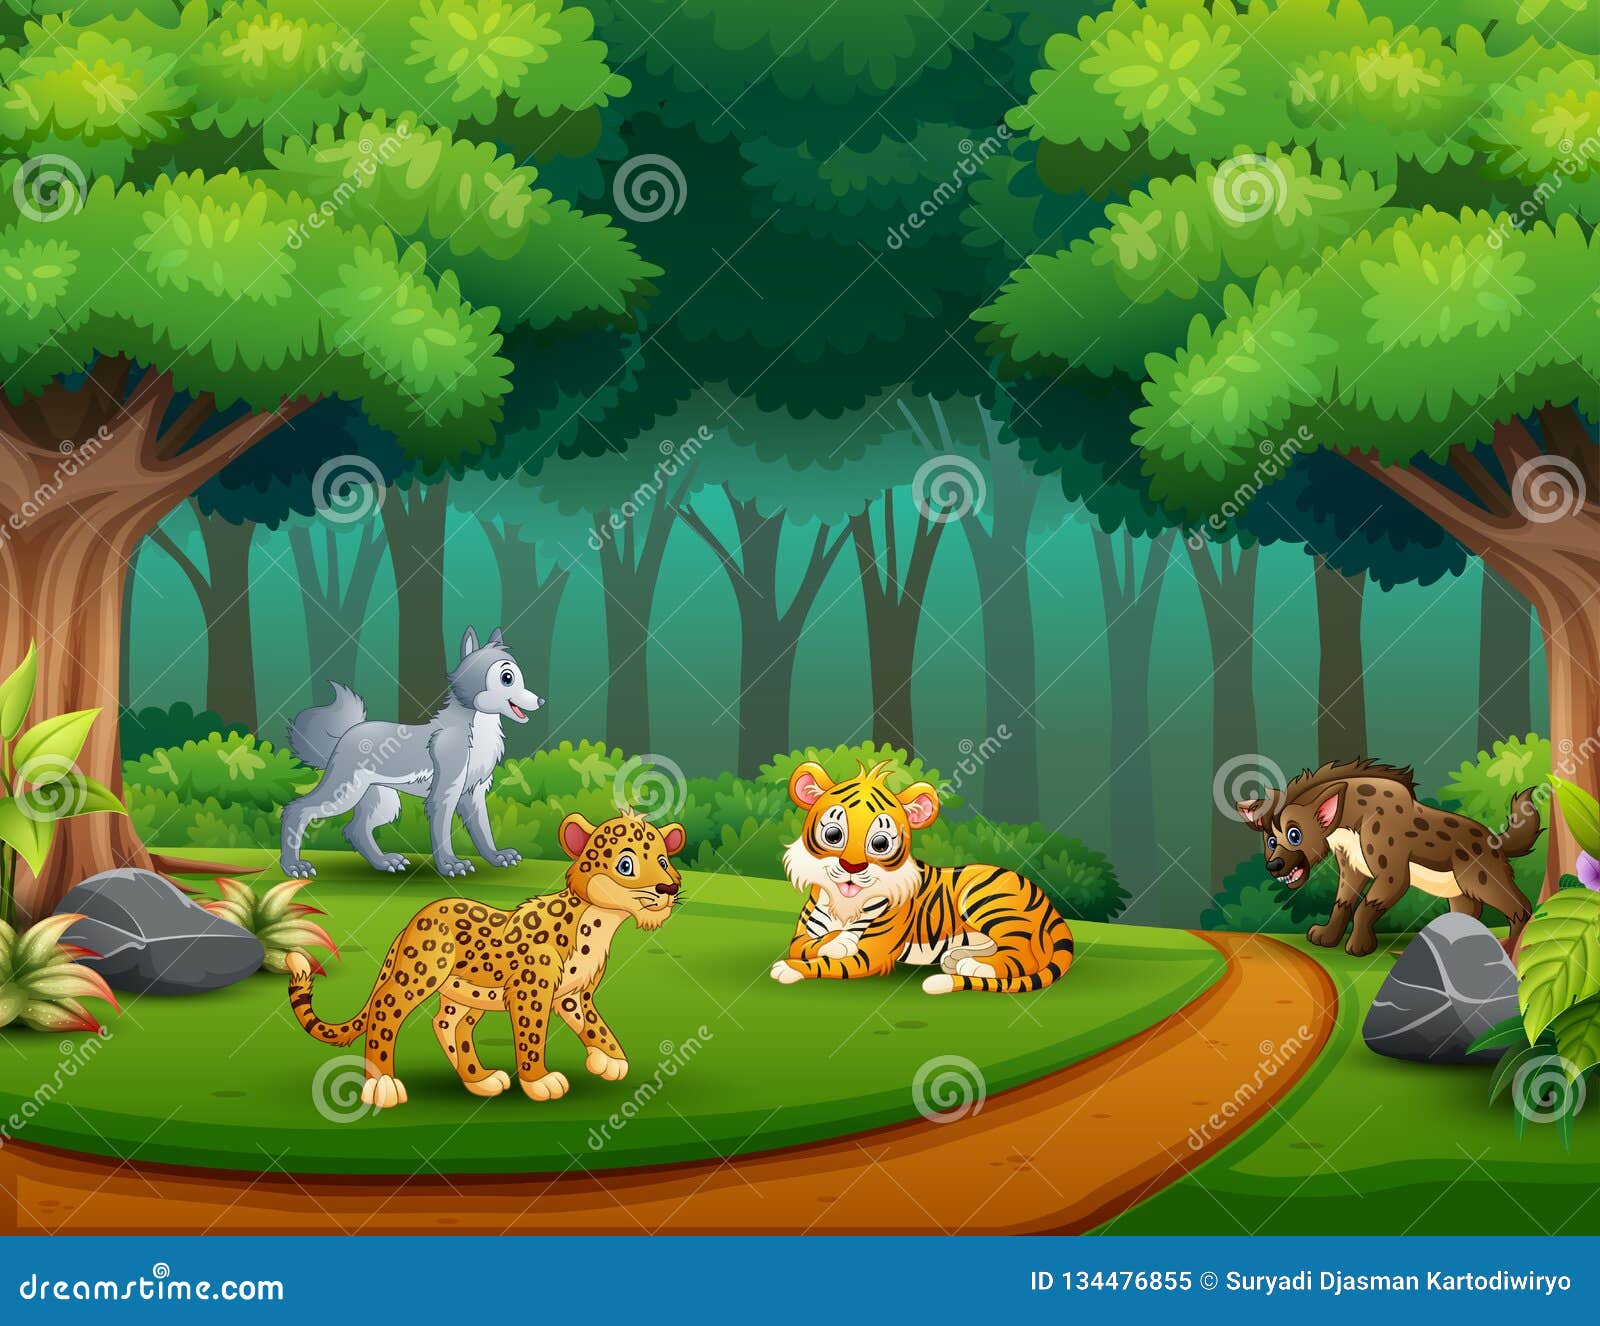 Cartoon Wild Animal in the Jungle Stock Vector - Illustration of nature,  paradise: 134476855